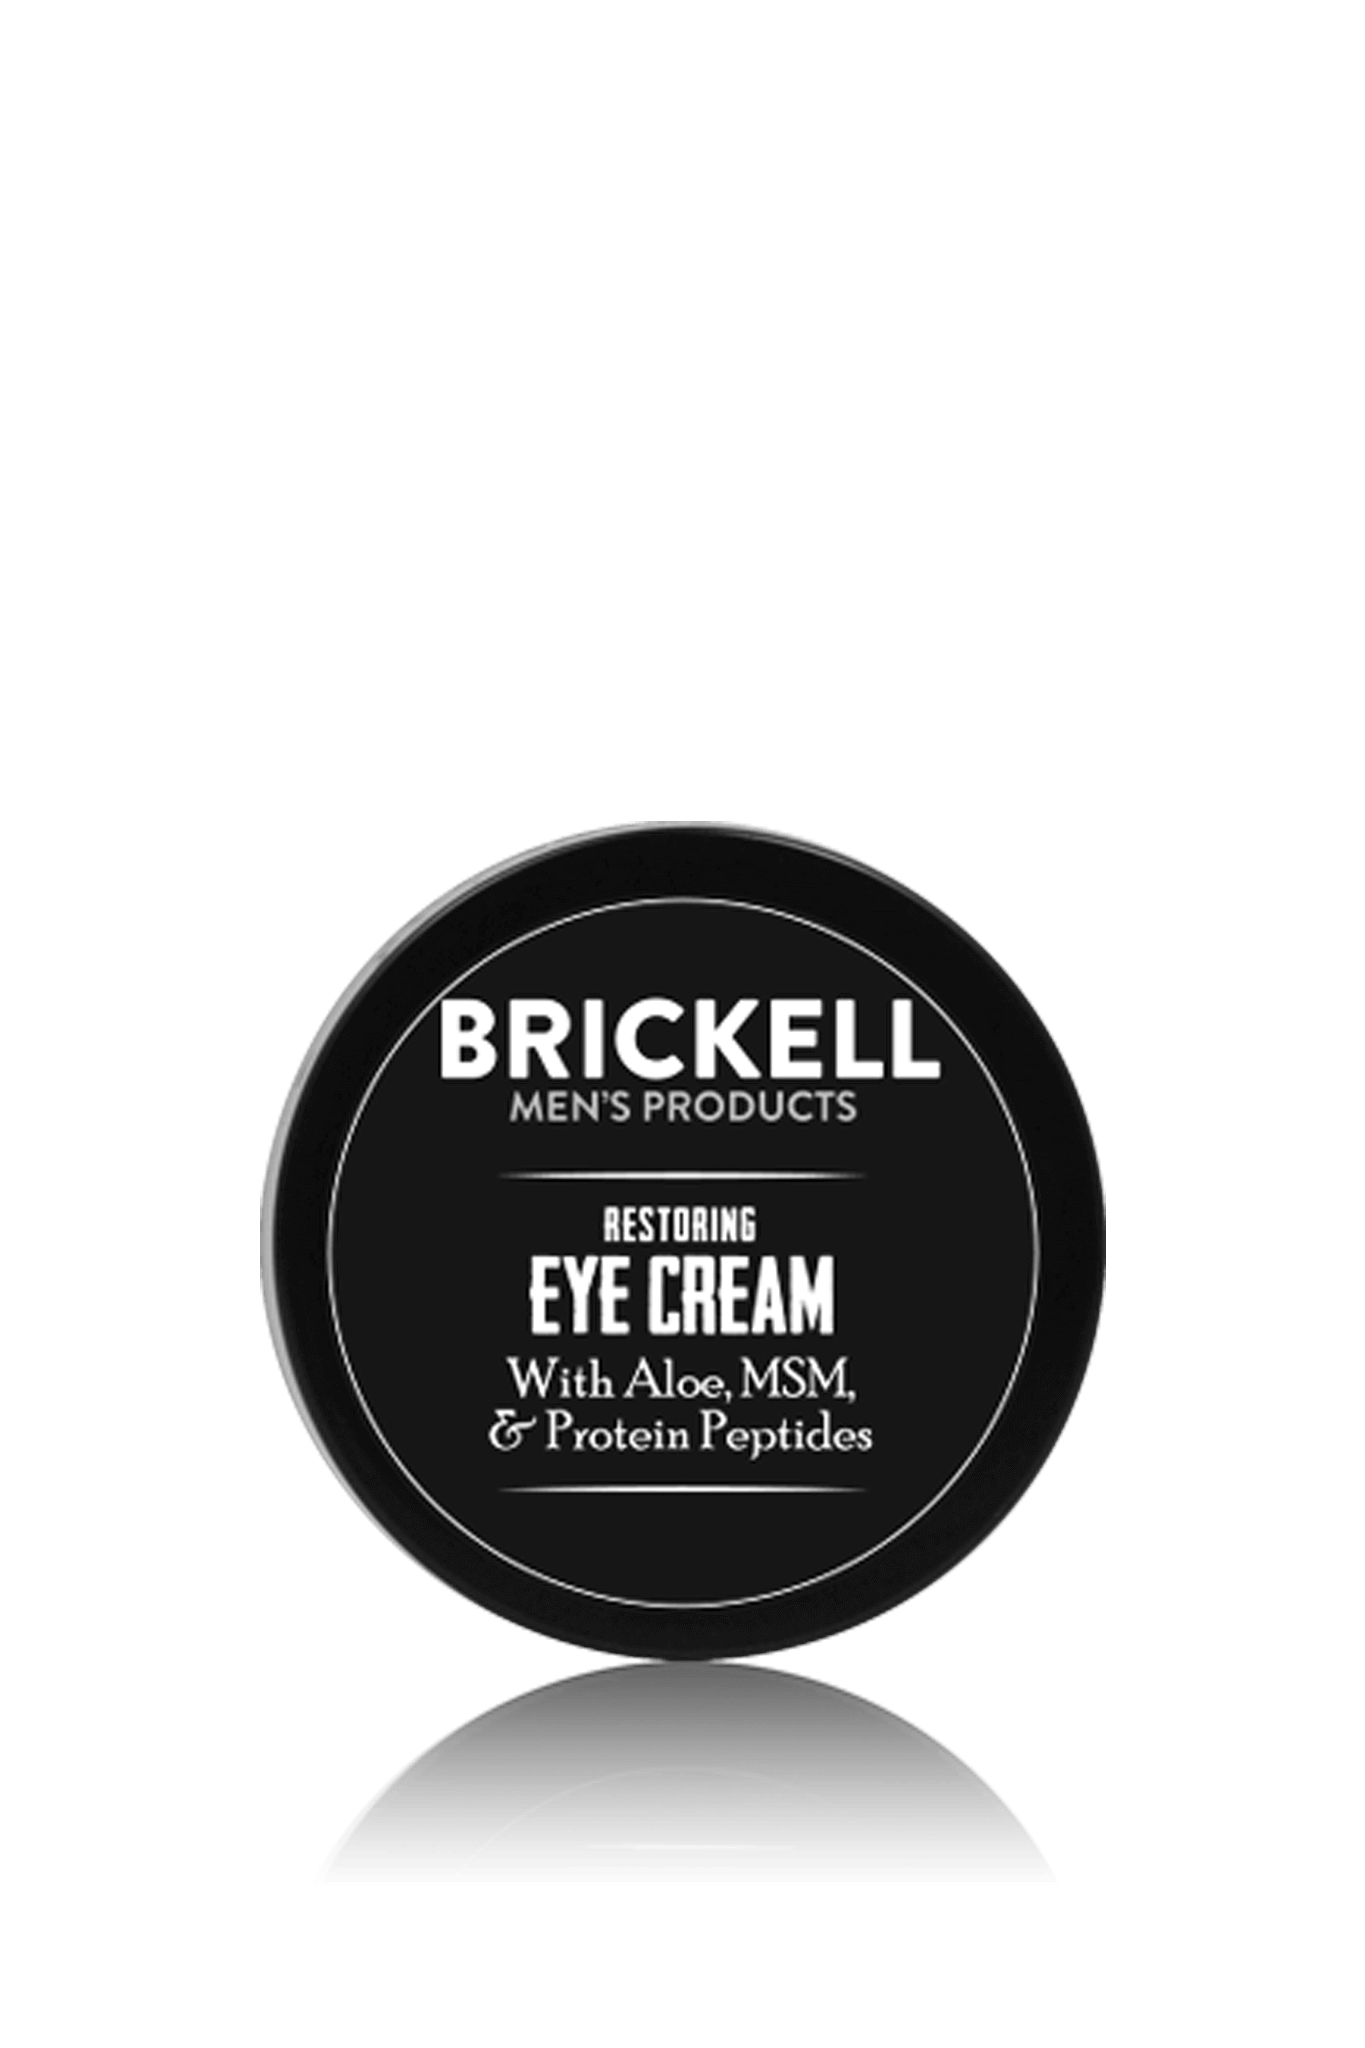 brickell eye cream review